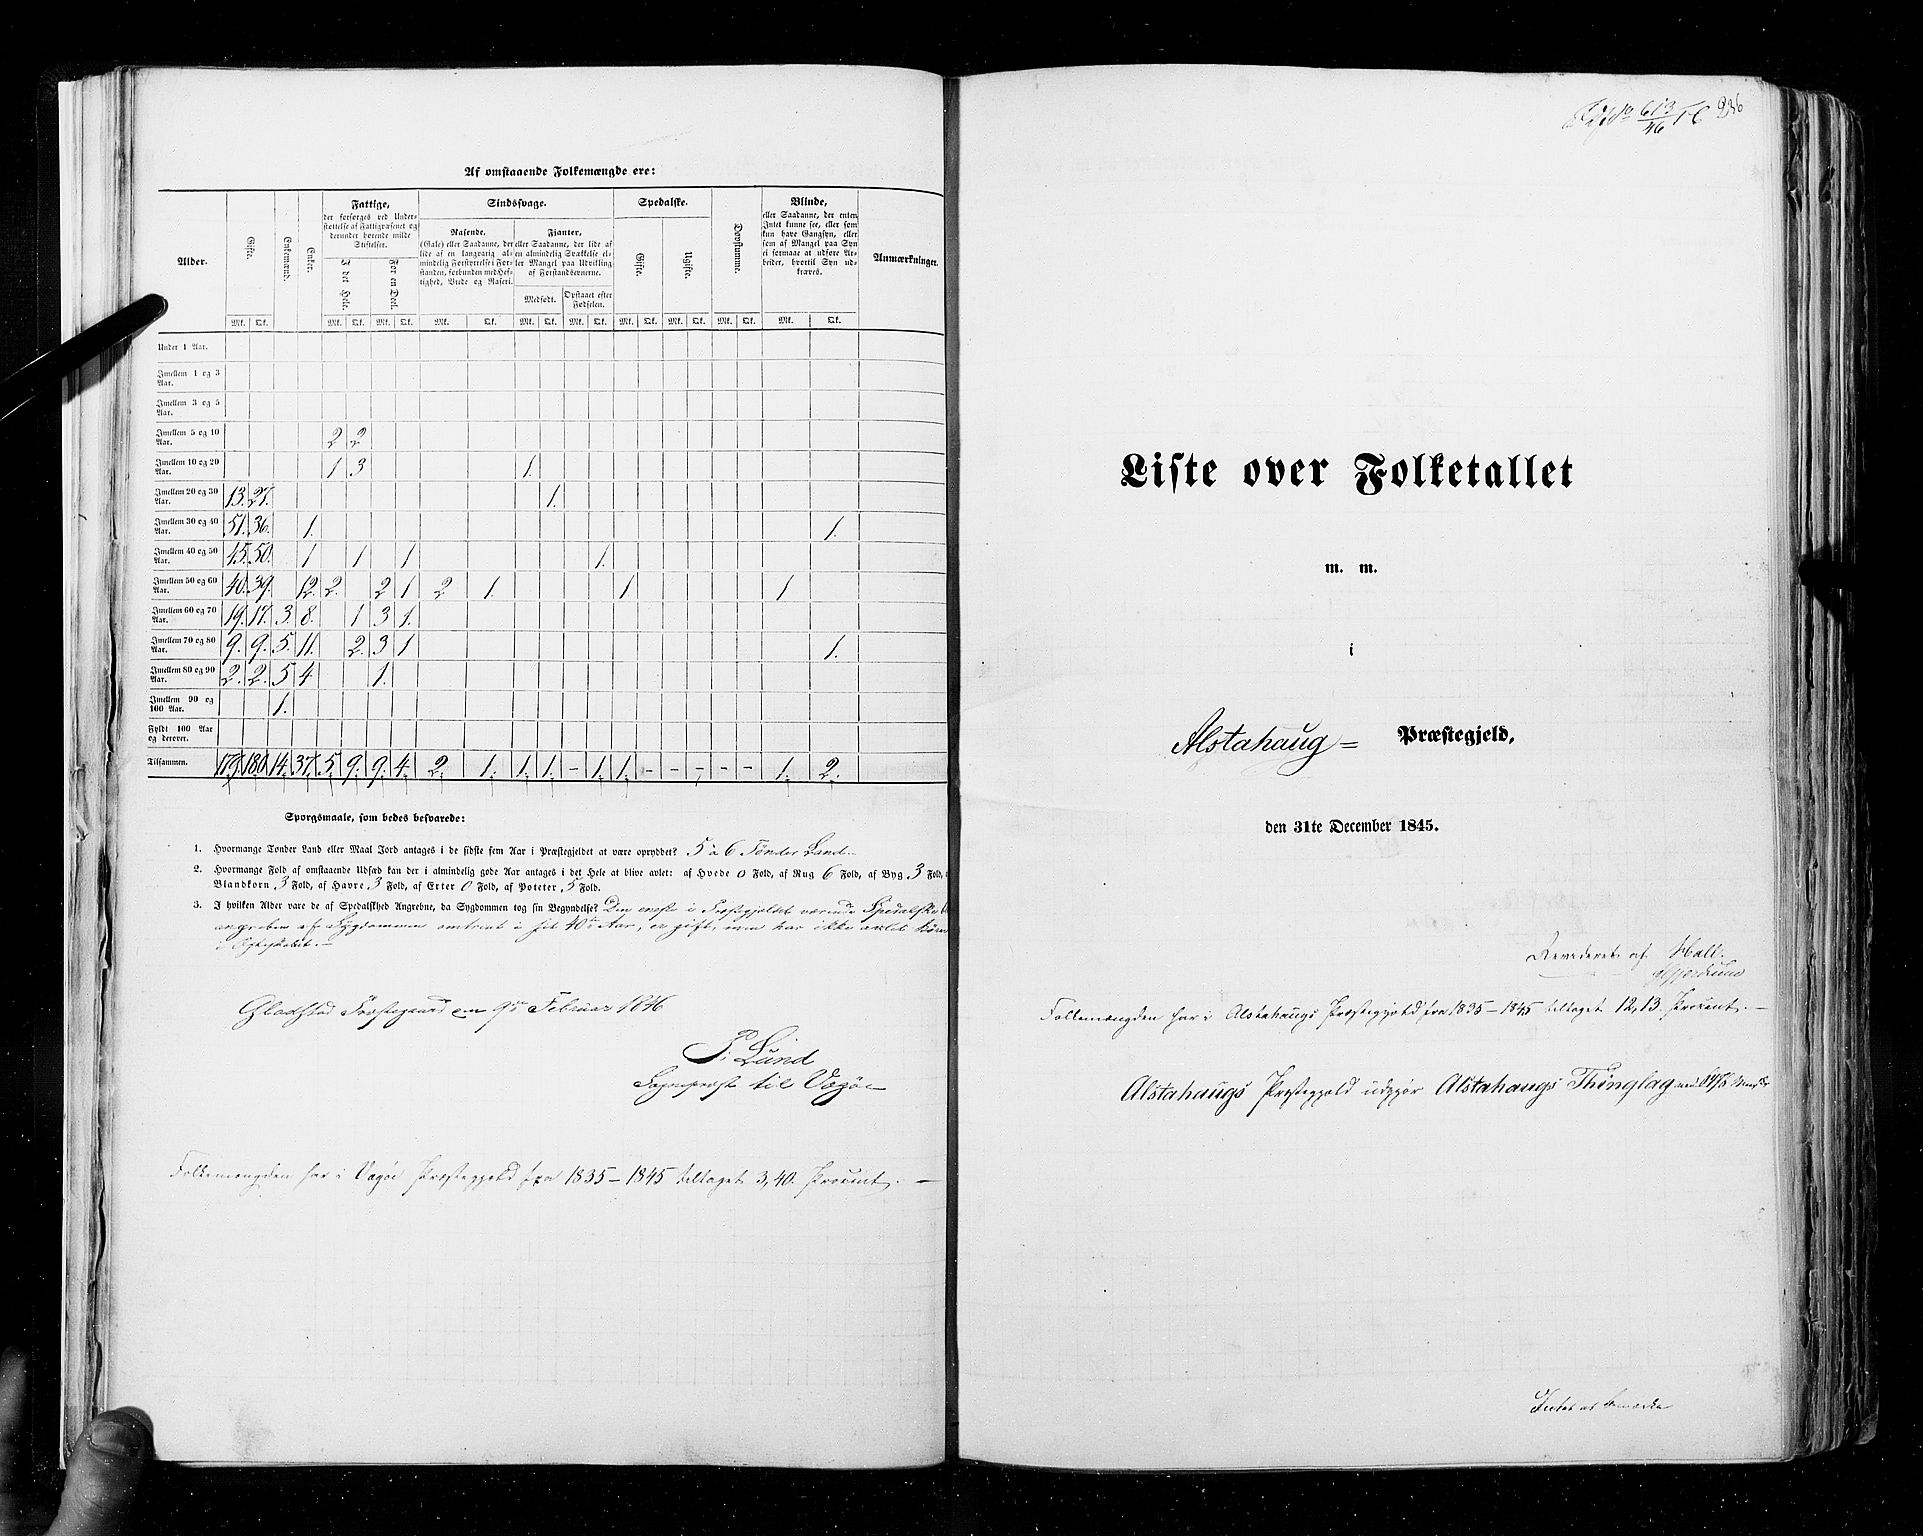 RA, Folketellingen 1845, bind 9B: Nordland amt, 1845, s. 236